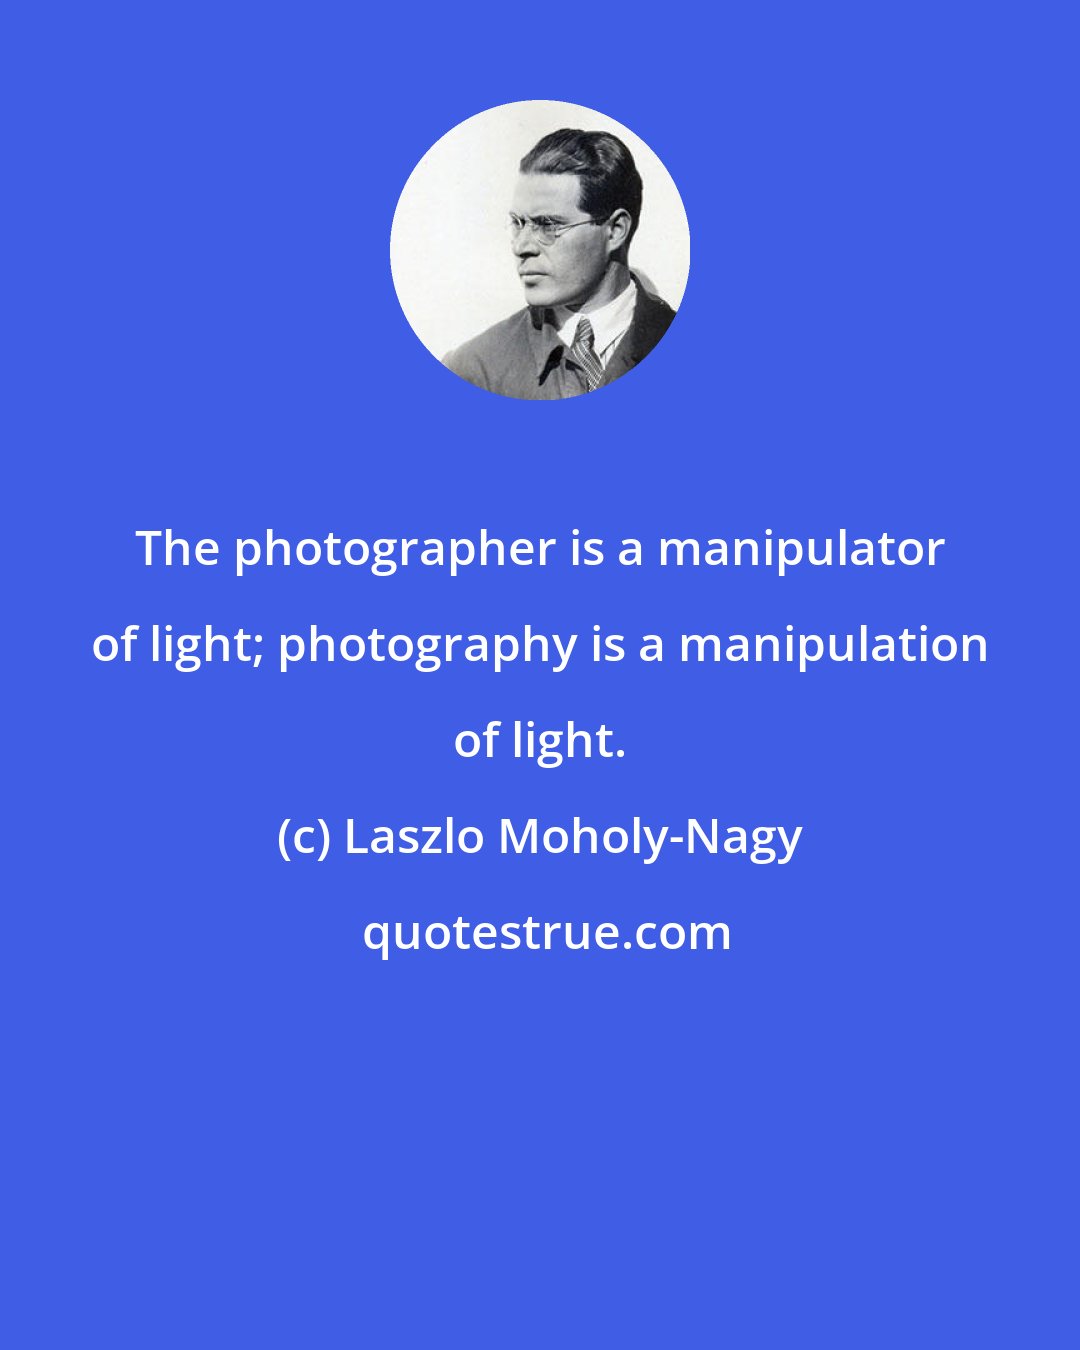 Laszlo Moholy-Nagy: The photographer is a manipulator of light; photography is a manipulation of light.